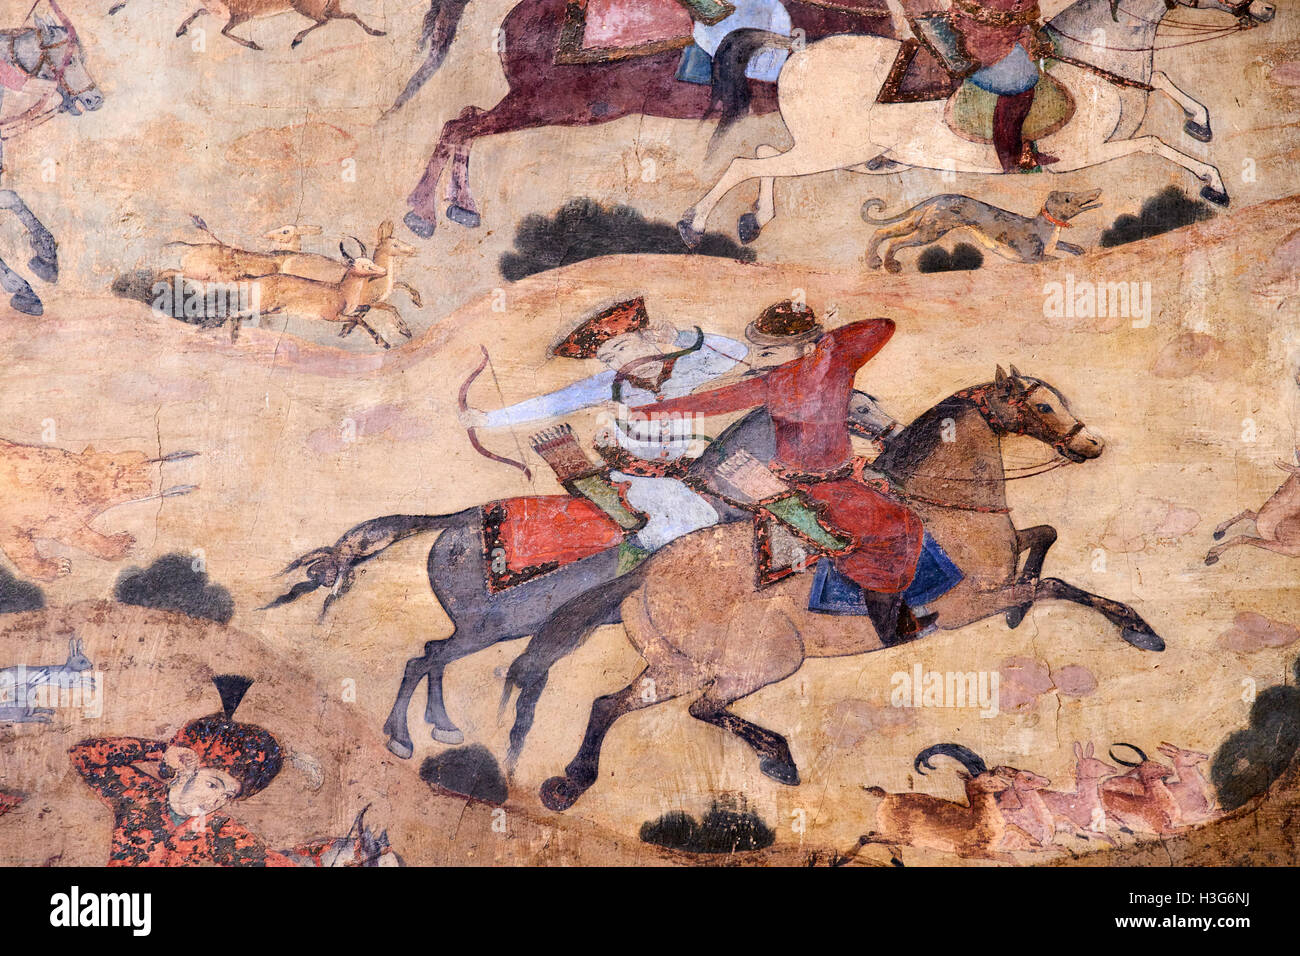 Iran, Isfahan, Imam Square, world heritage of the UNESCO, Qeysarieh portal Stock Photo